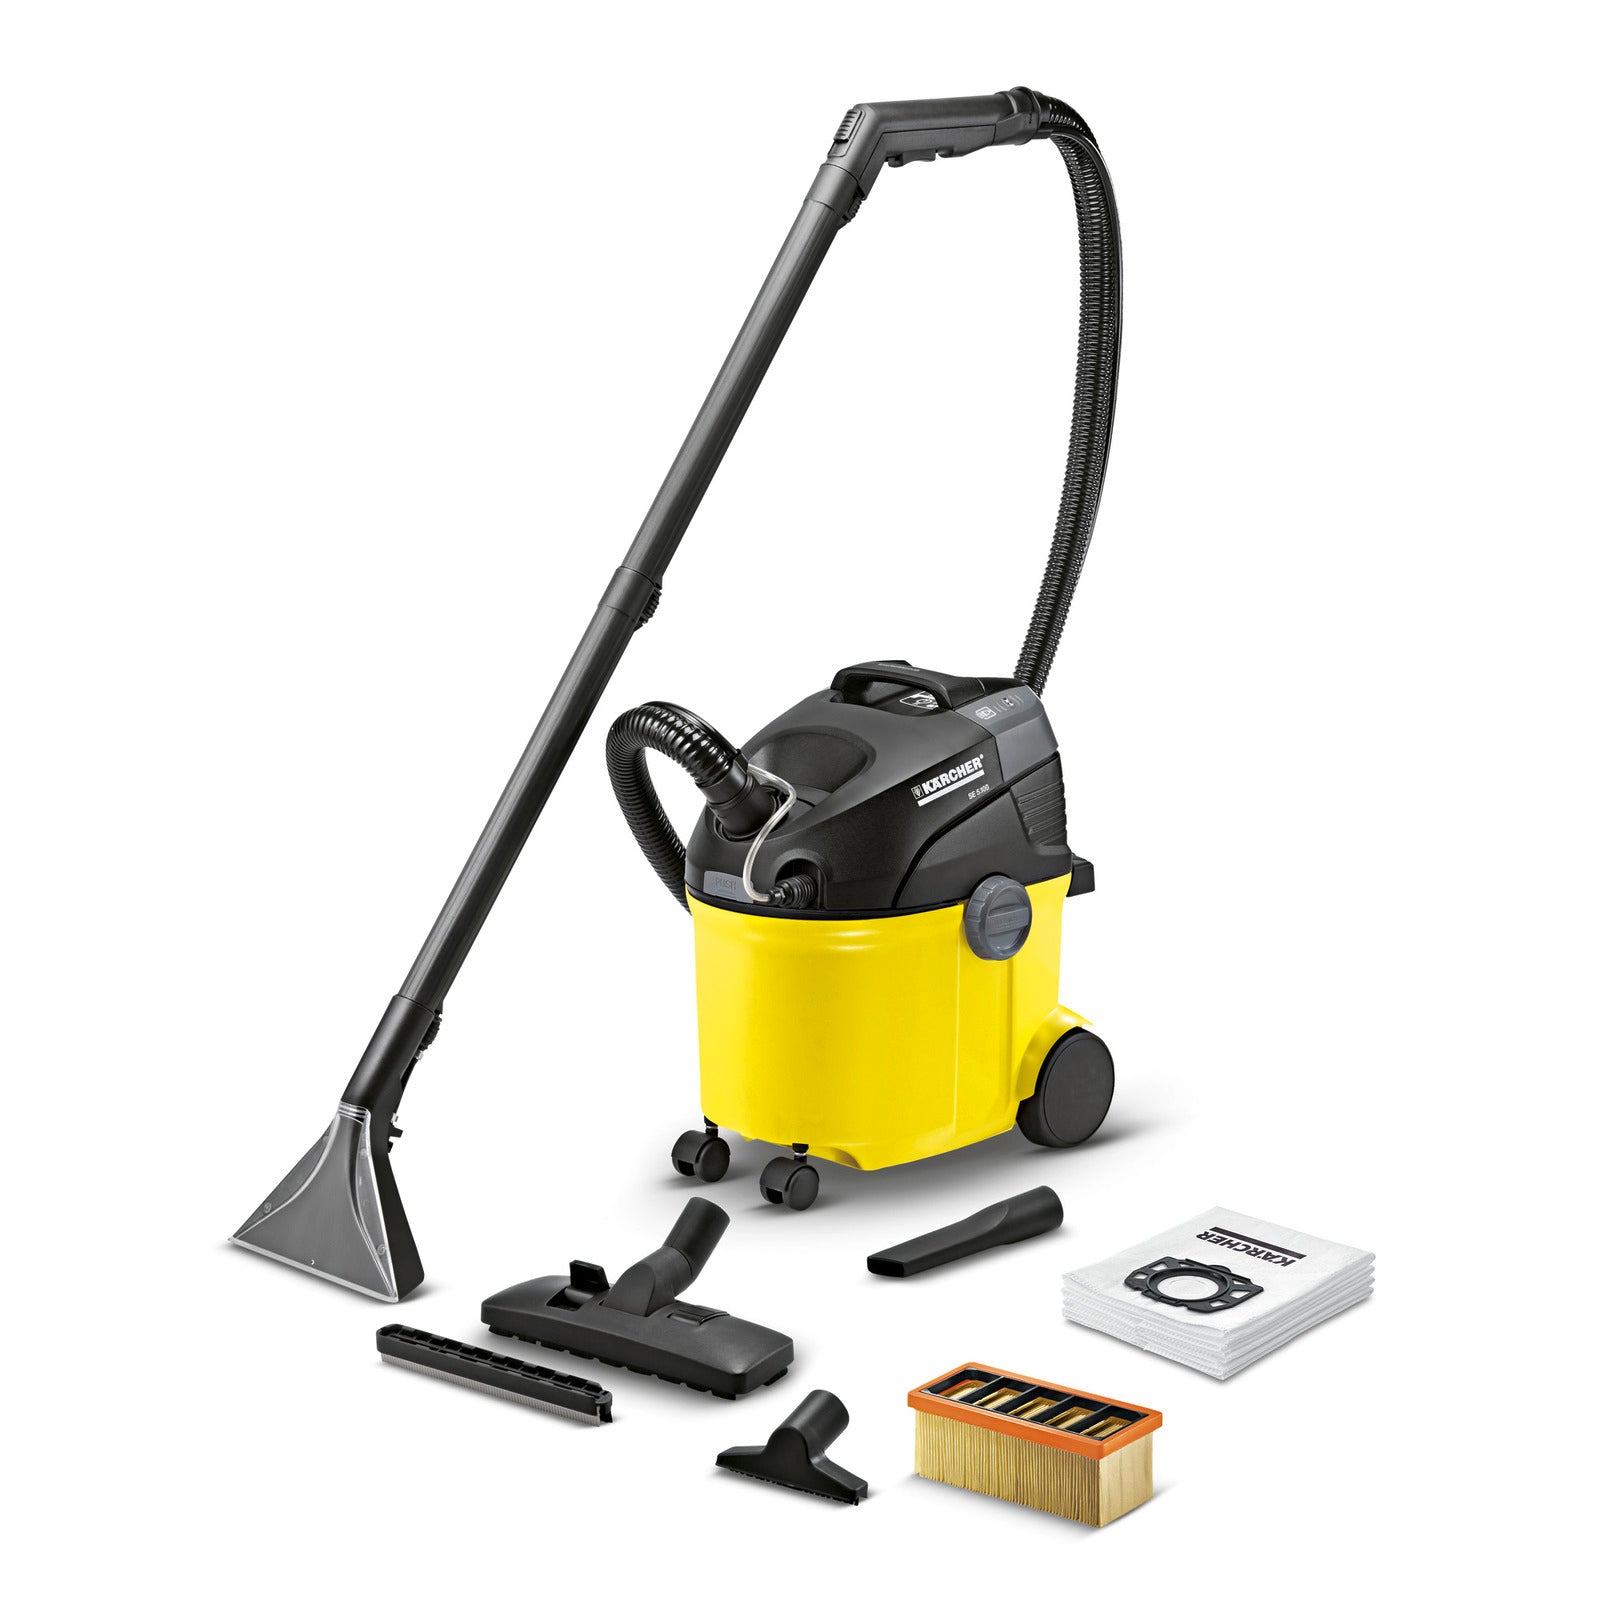 Kärcher vacuum cleaner SE 5.100